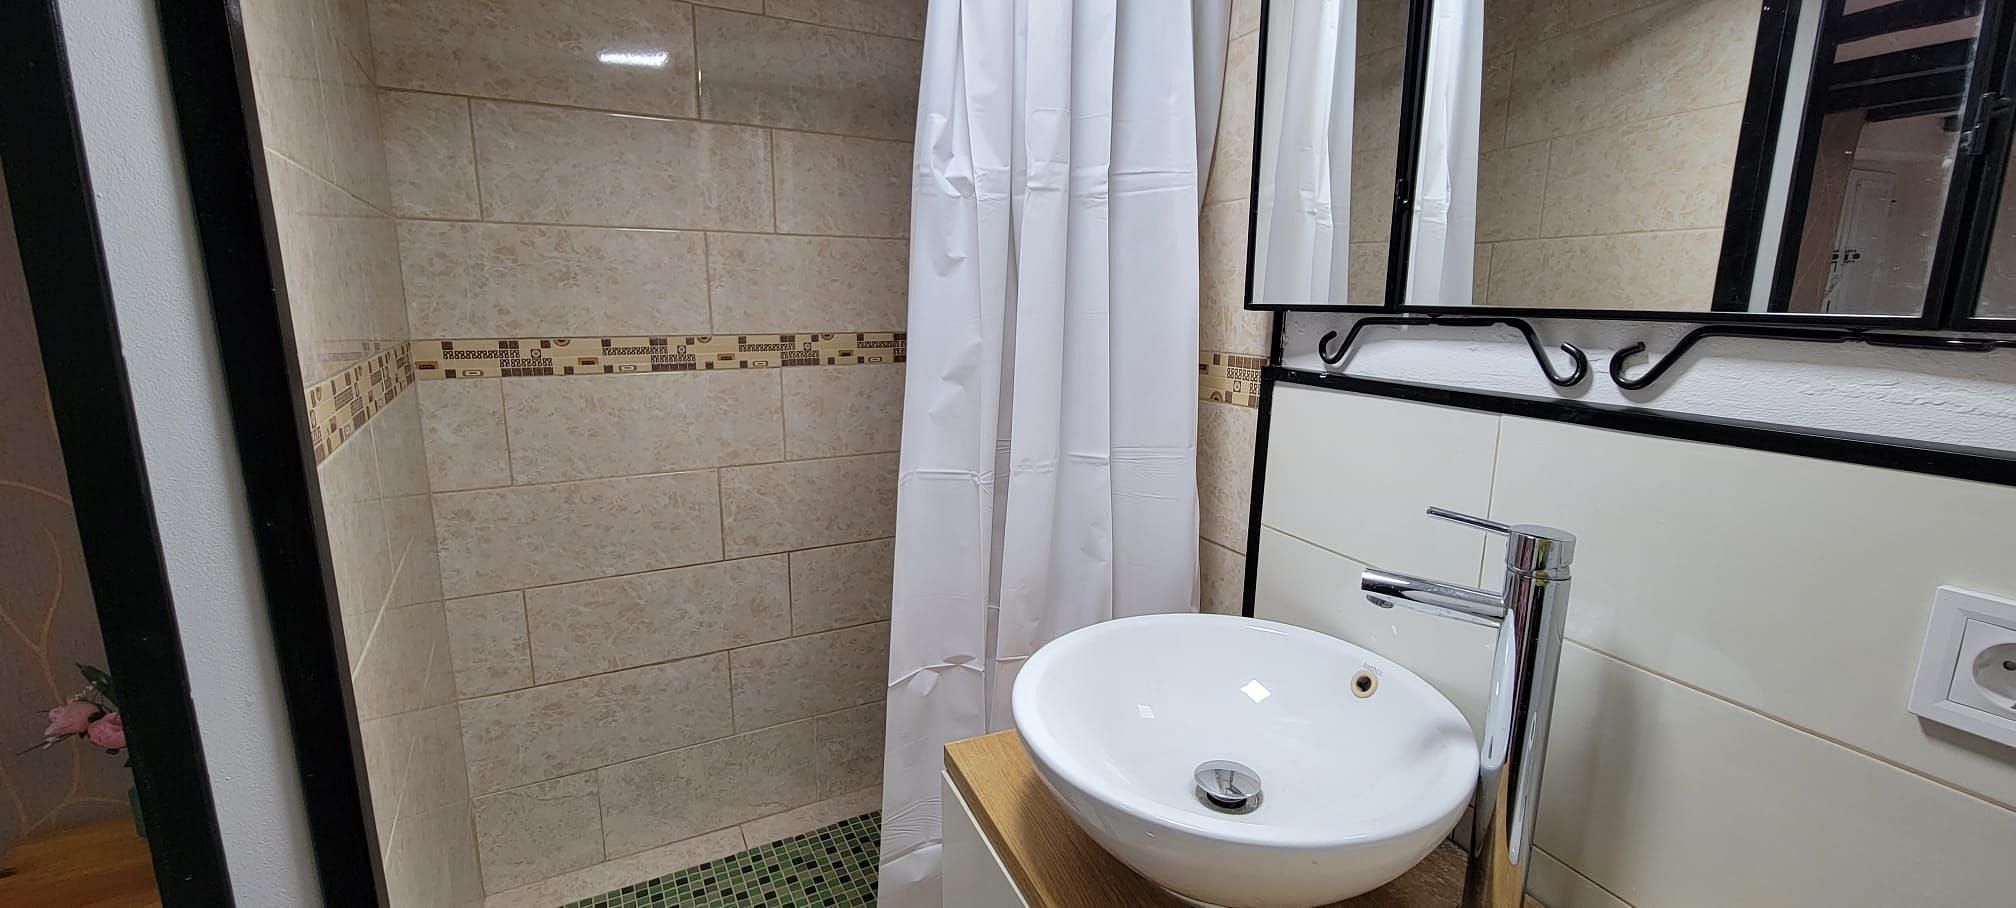 JWguest Apartment at Sayalonga, Andalucía | Apartment in Sayalonga | Jwbnb no brobnb 16